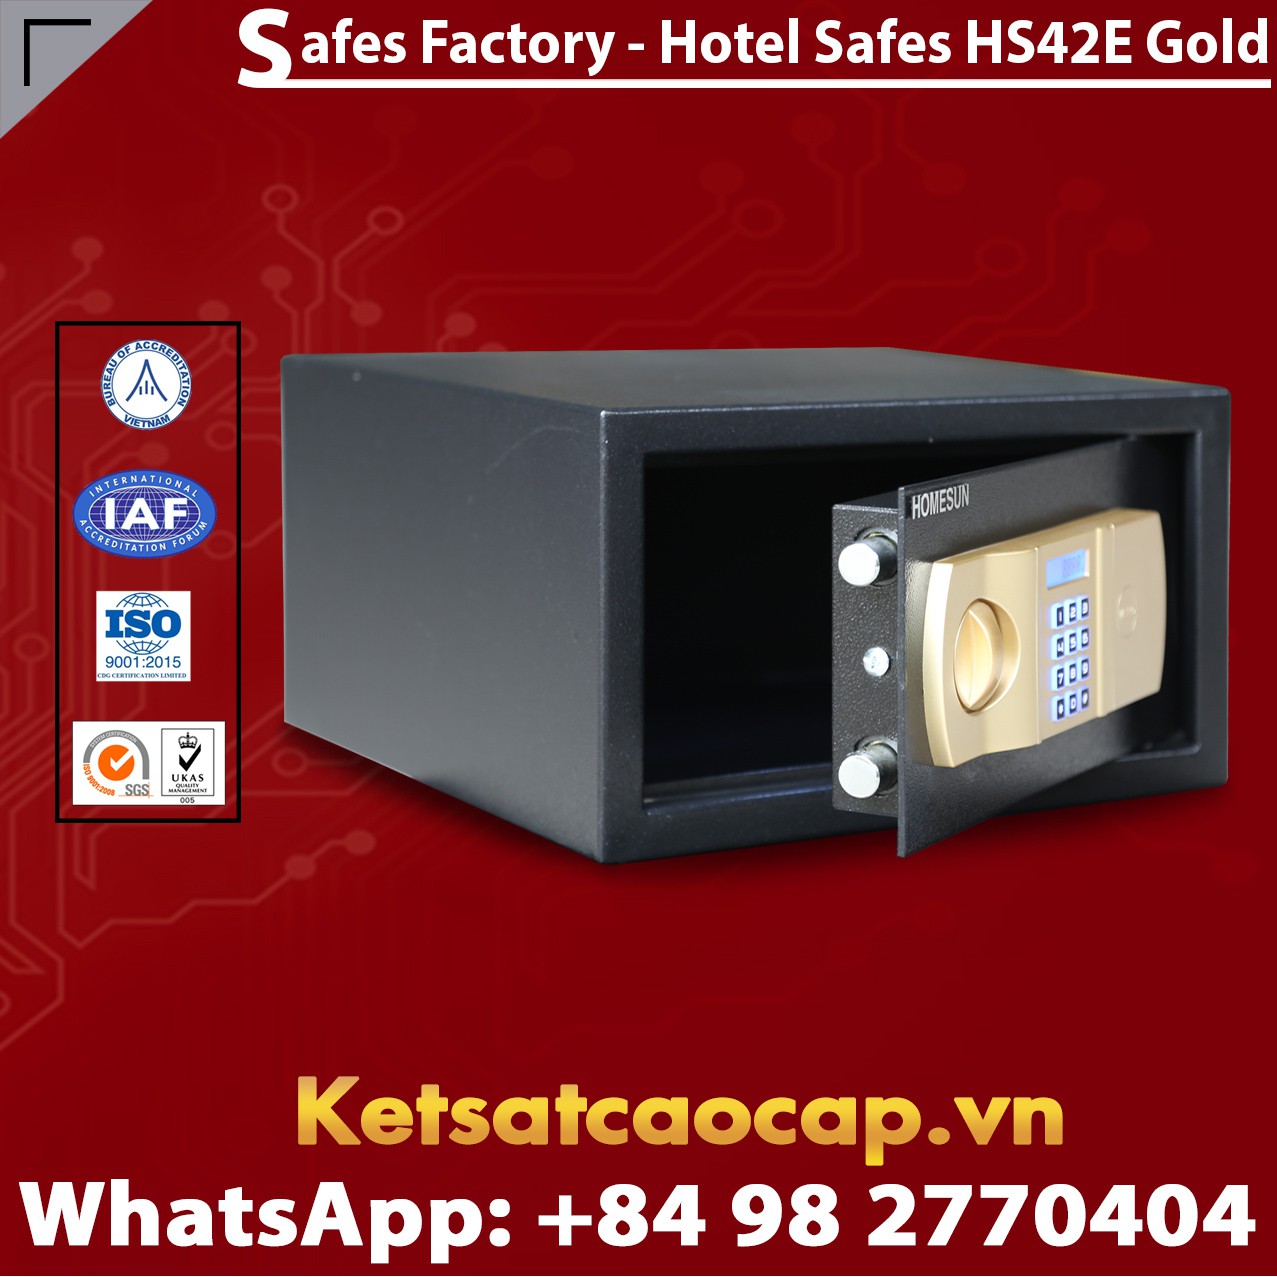 Hotel Safes Resort HOMESUN HS42 E Gold